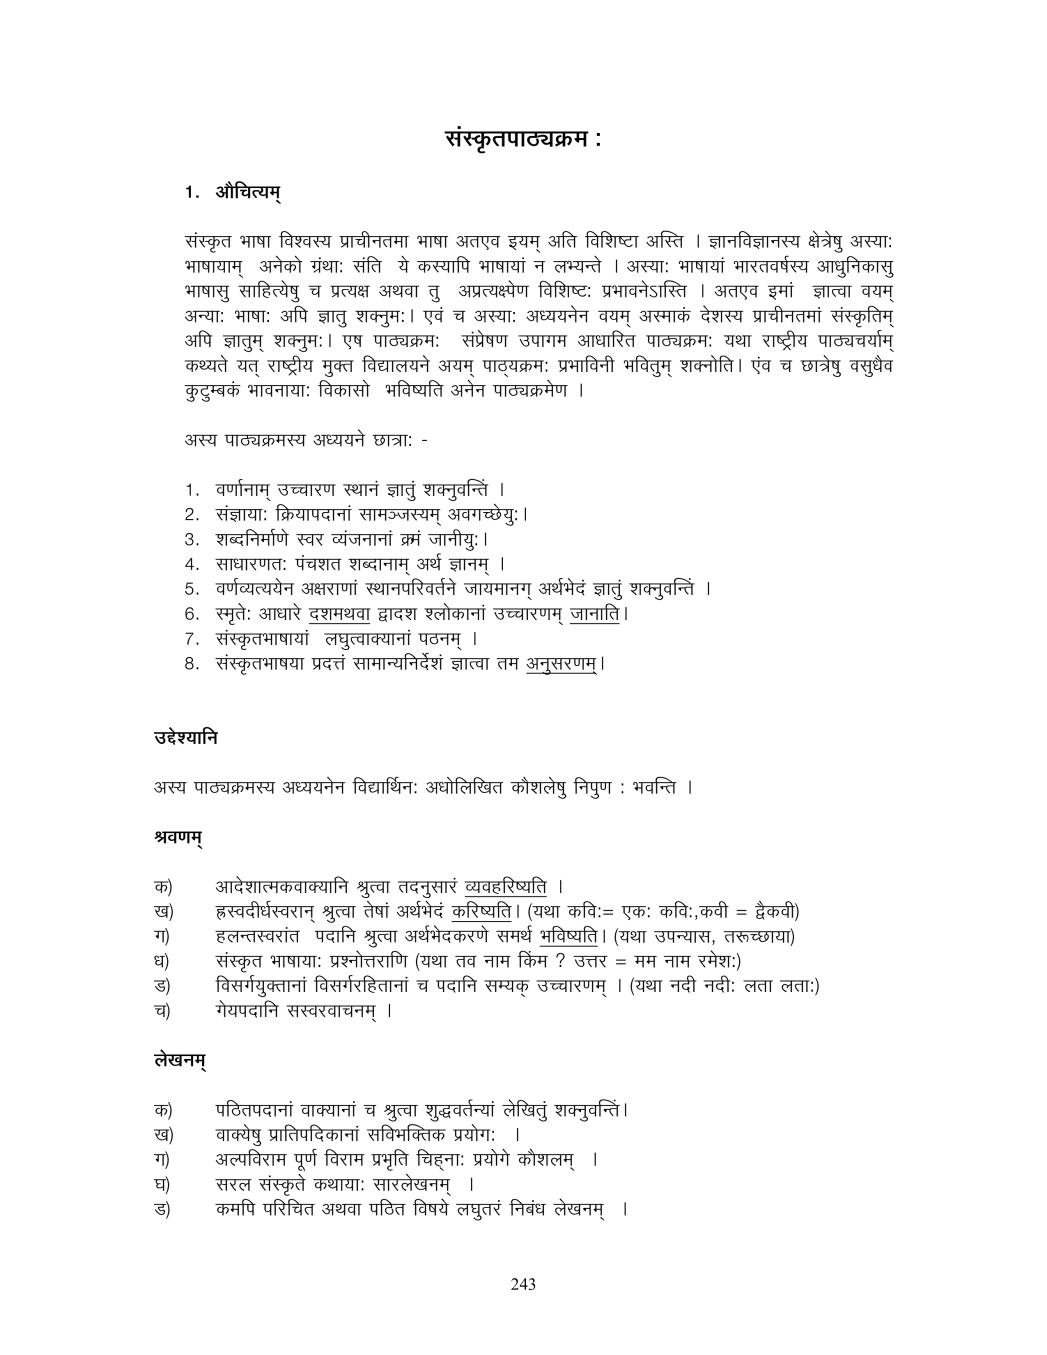 NIOS Class 10 Syllabus - Sanskrit - Page 1